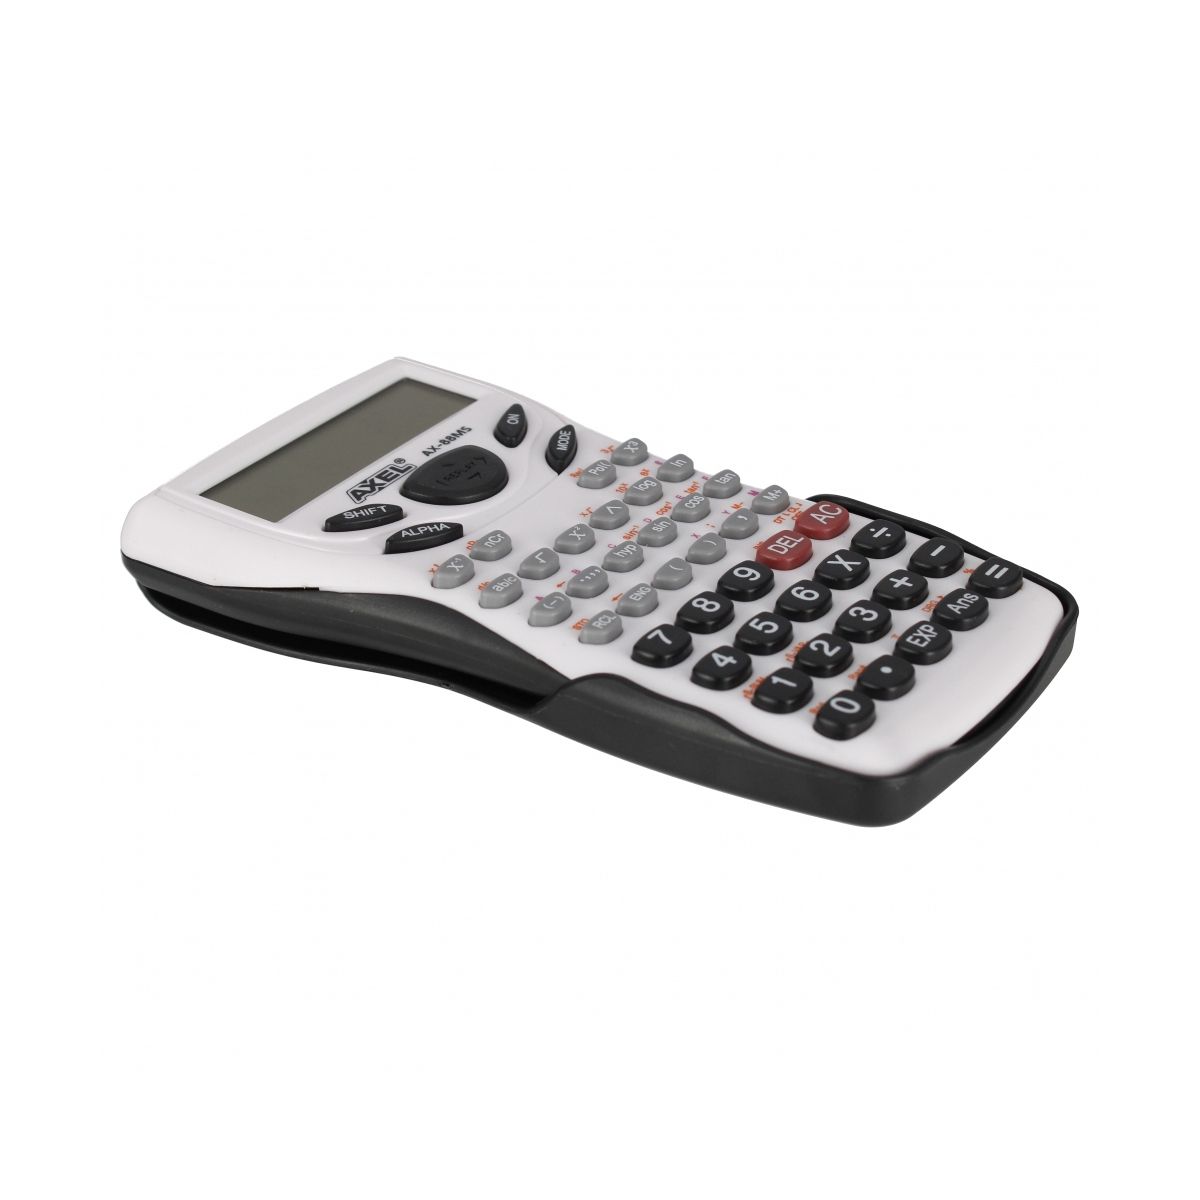 Kalkulator kieszonkowy AX-88MS Axel (526705)